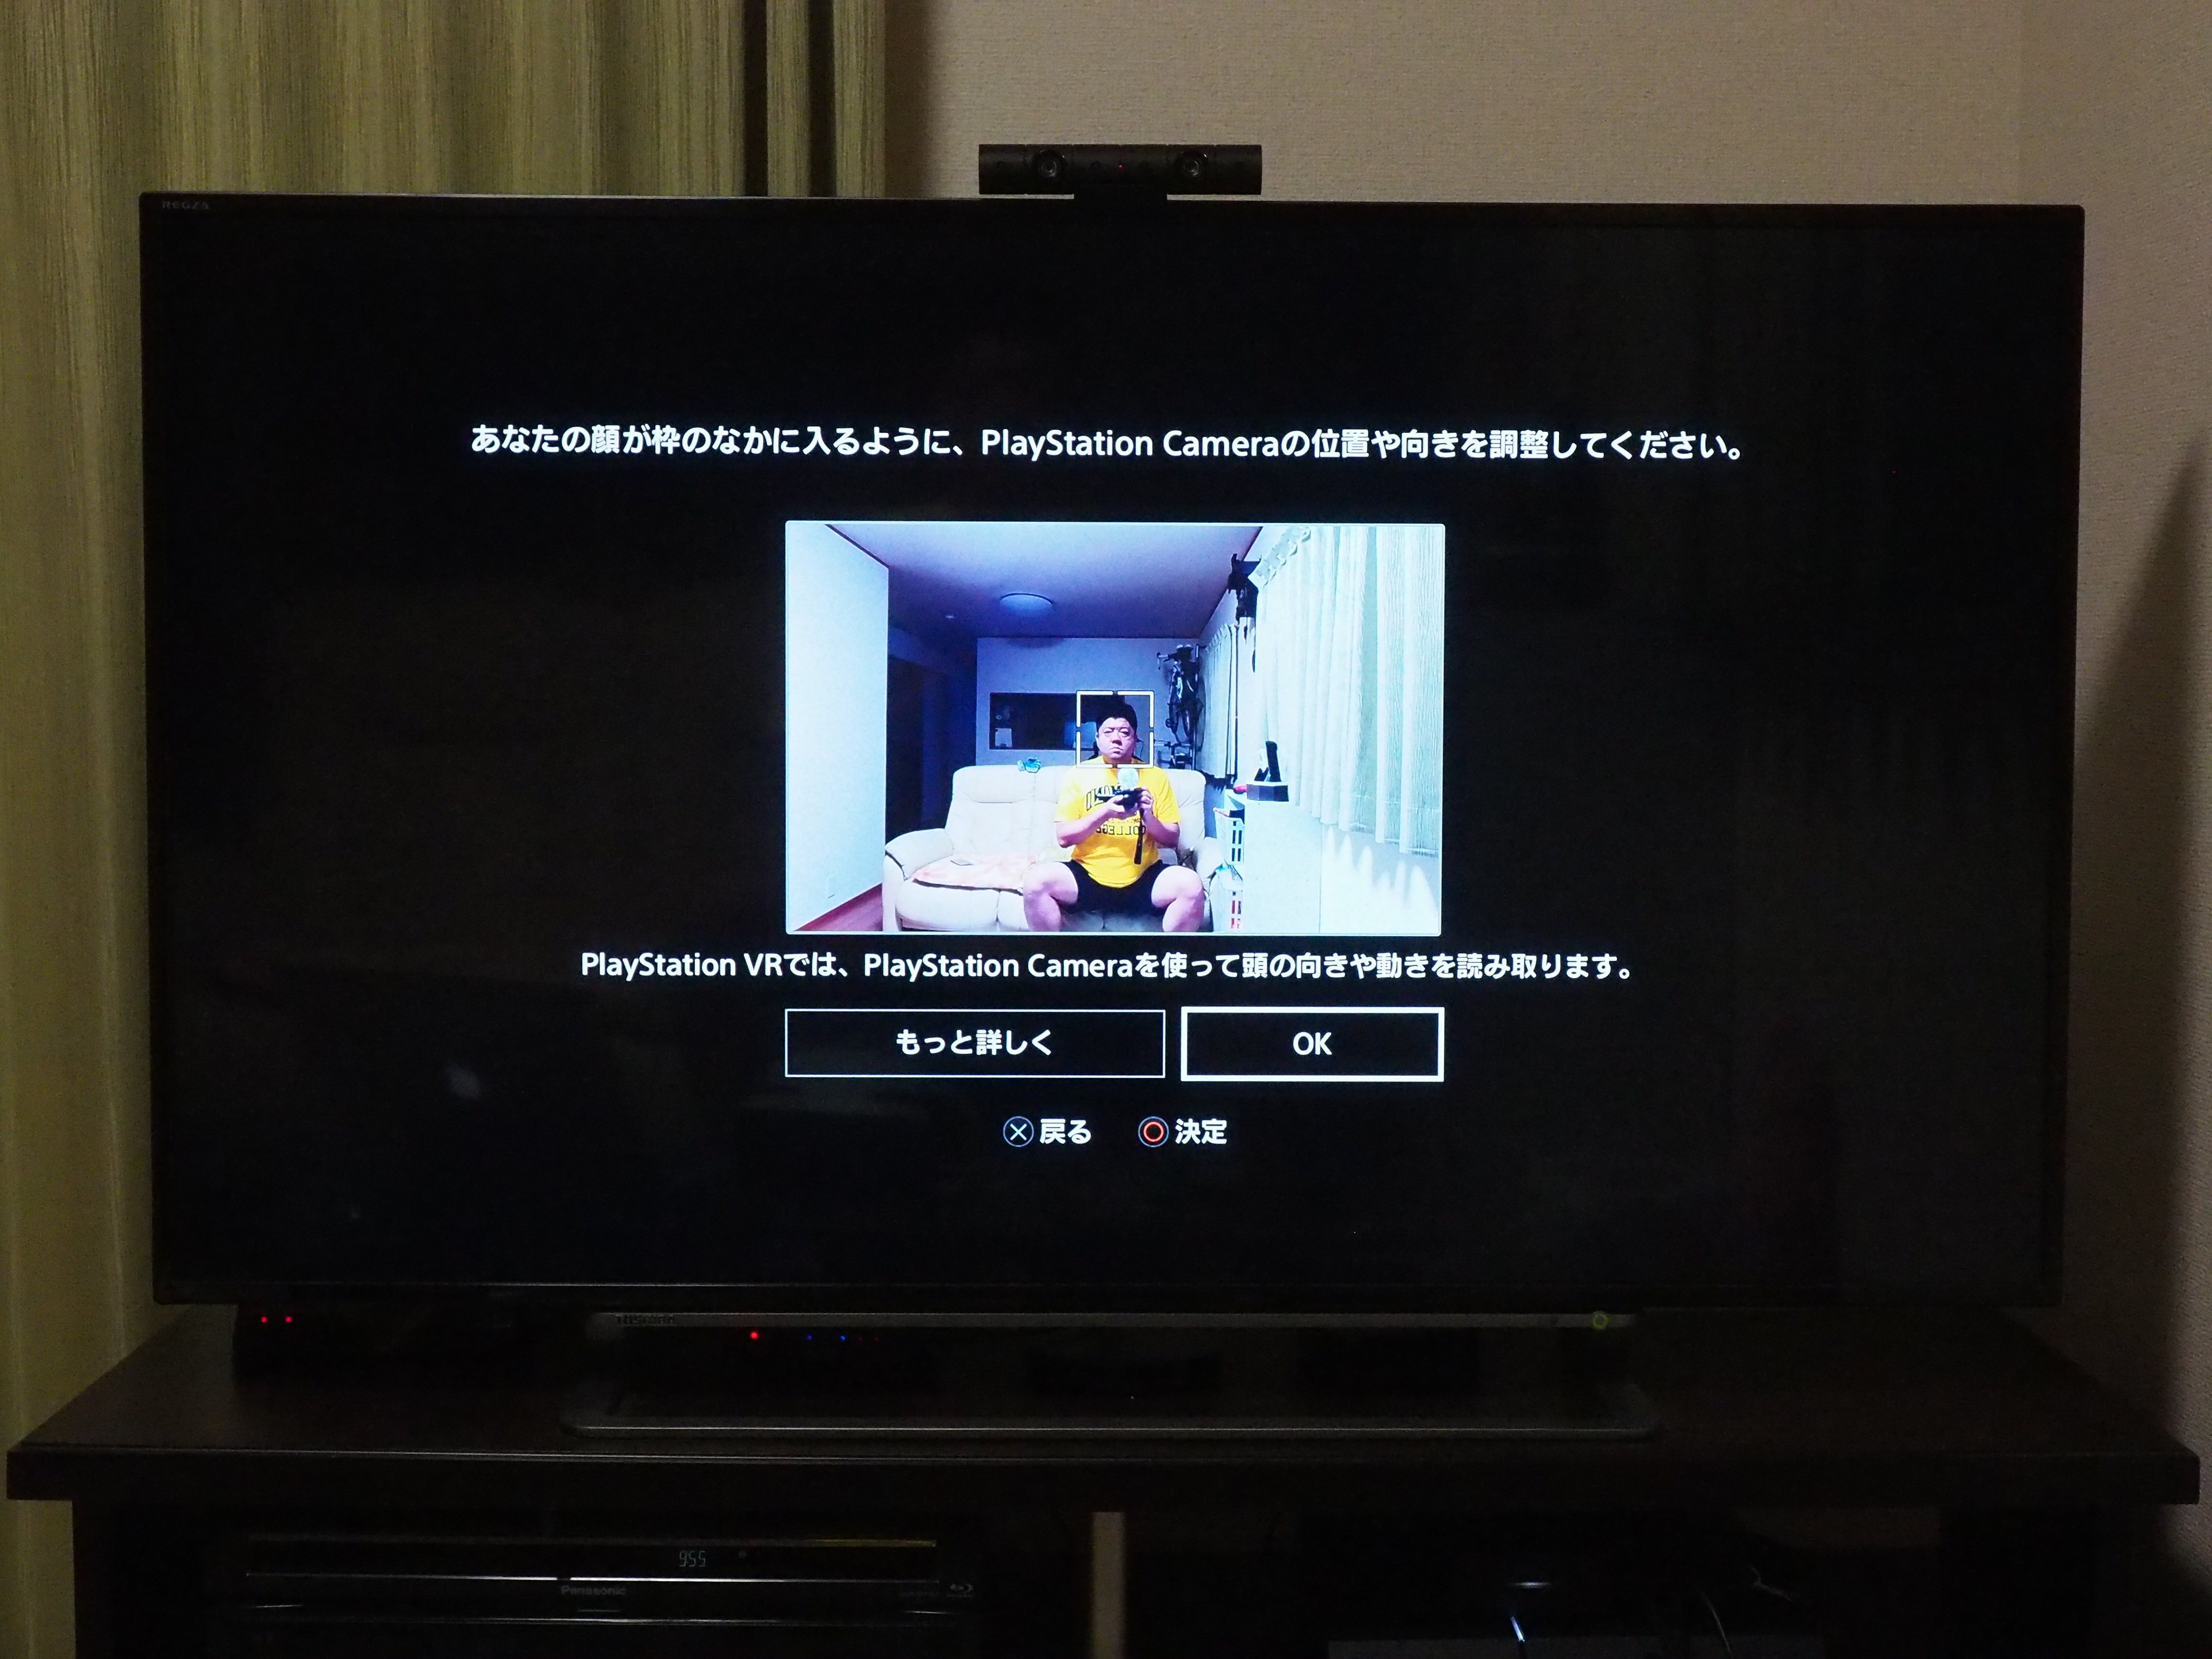 Playstation Vr開梱の儀 家庭用ゲーム機ならではの簡易なセットアップ ケーブル取り回しには一工夫必要 Engadget 日本版